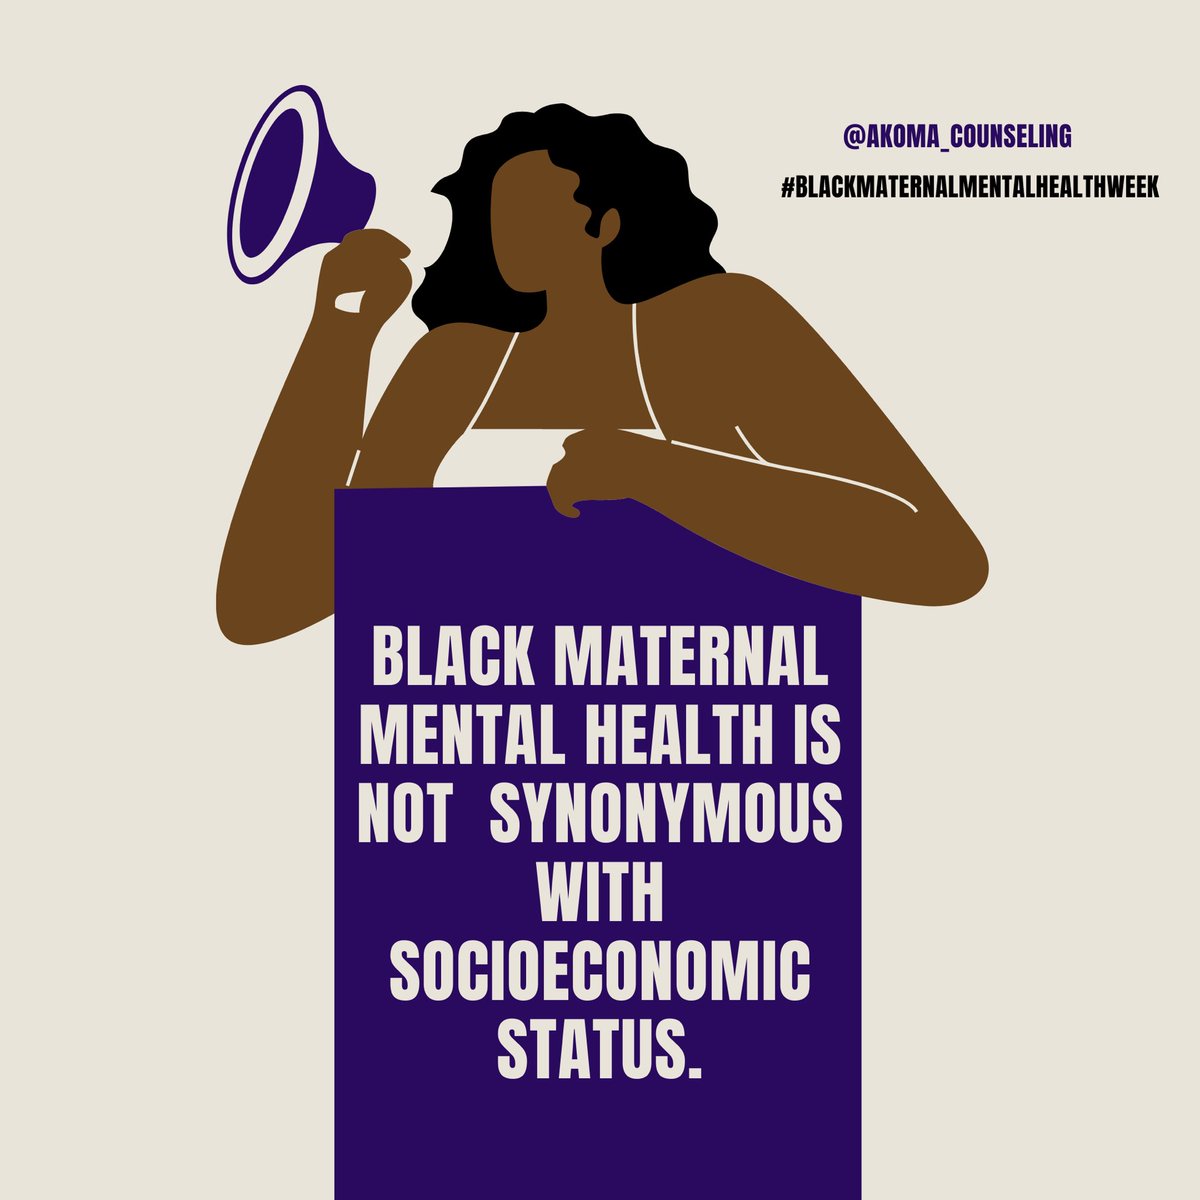 A thread: Black maternal mental health is not synonymous with socioeconomic status.  #Postpartumdepression, #PostpartumAnxiety, Postpartum Obsessive Compulsive Disorders, Postpartum PTSD, Psychosis, does not discriminate against: financial status, #blackmaternalmentalhealthweek